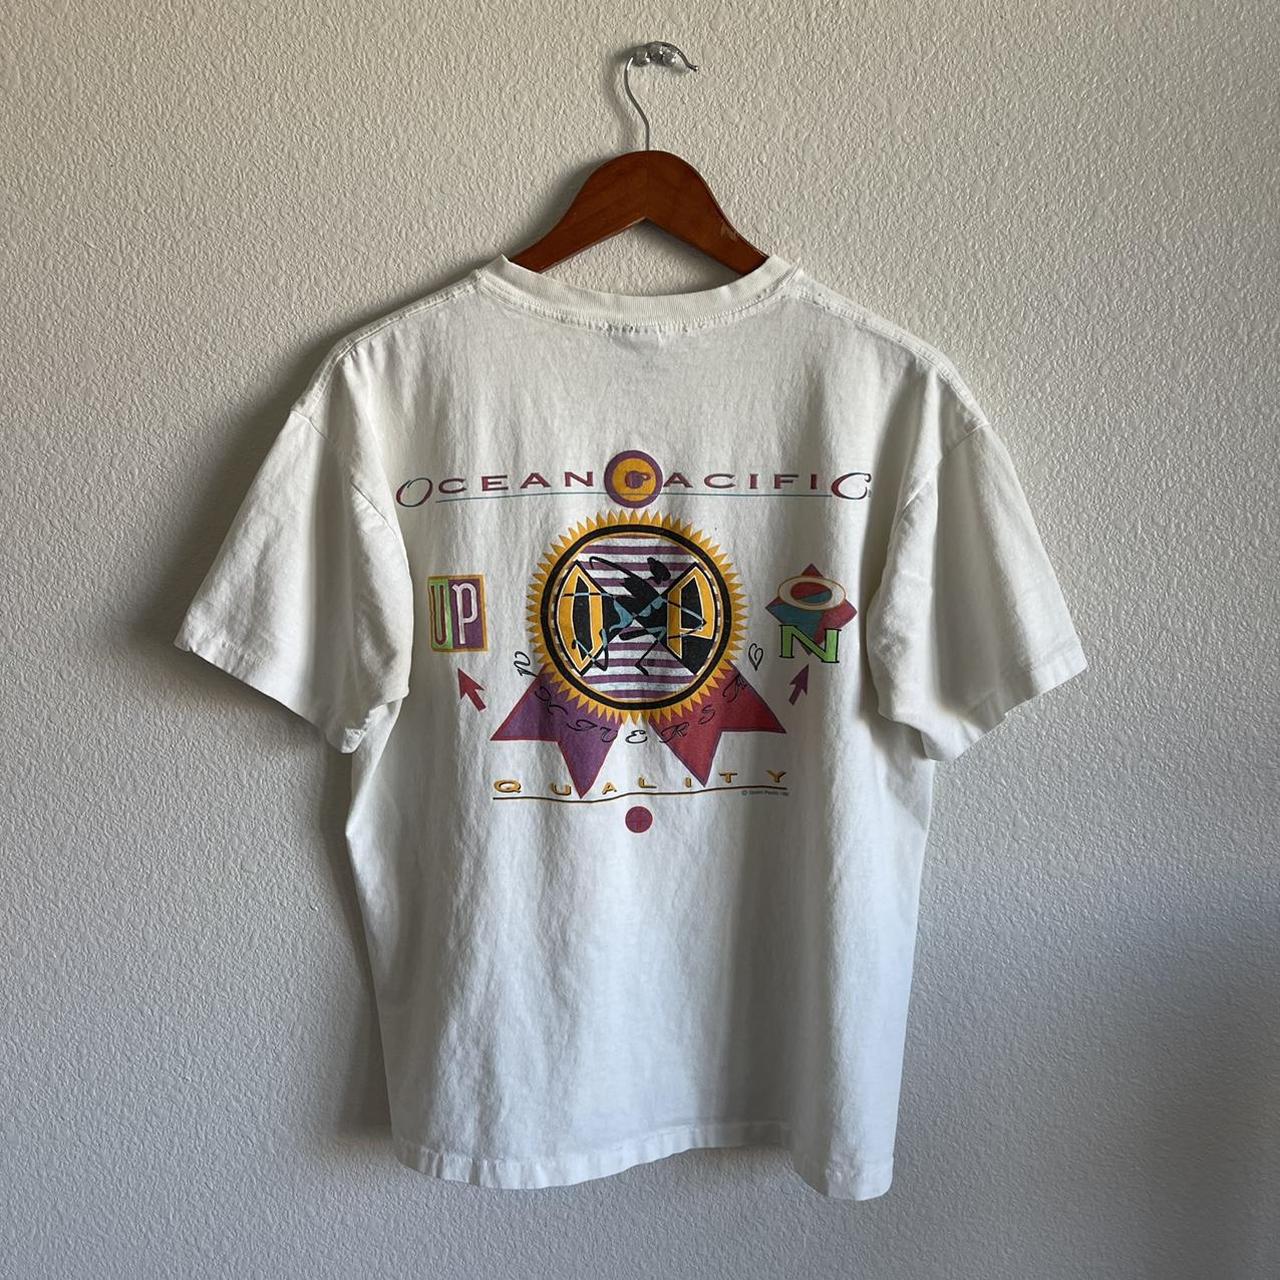 Ocean Pacific Men's White T-shirt (3)